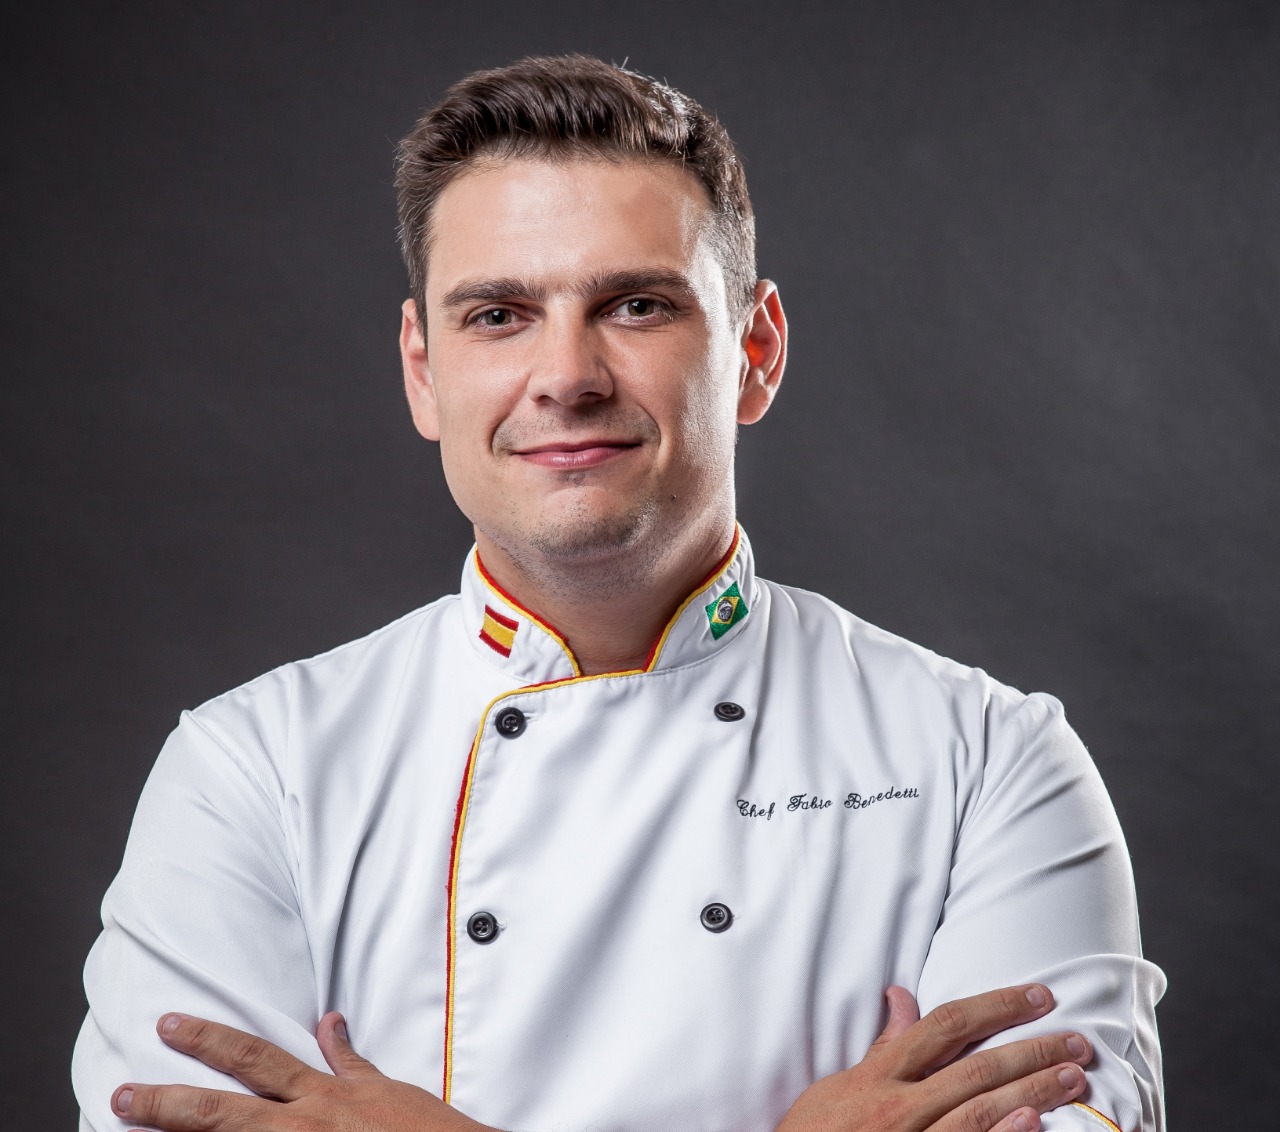 Chef-Fábio-Benedetti-paella-pepe.jpg